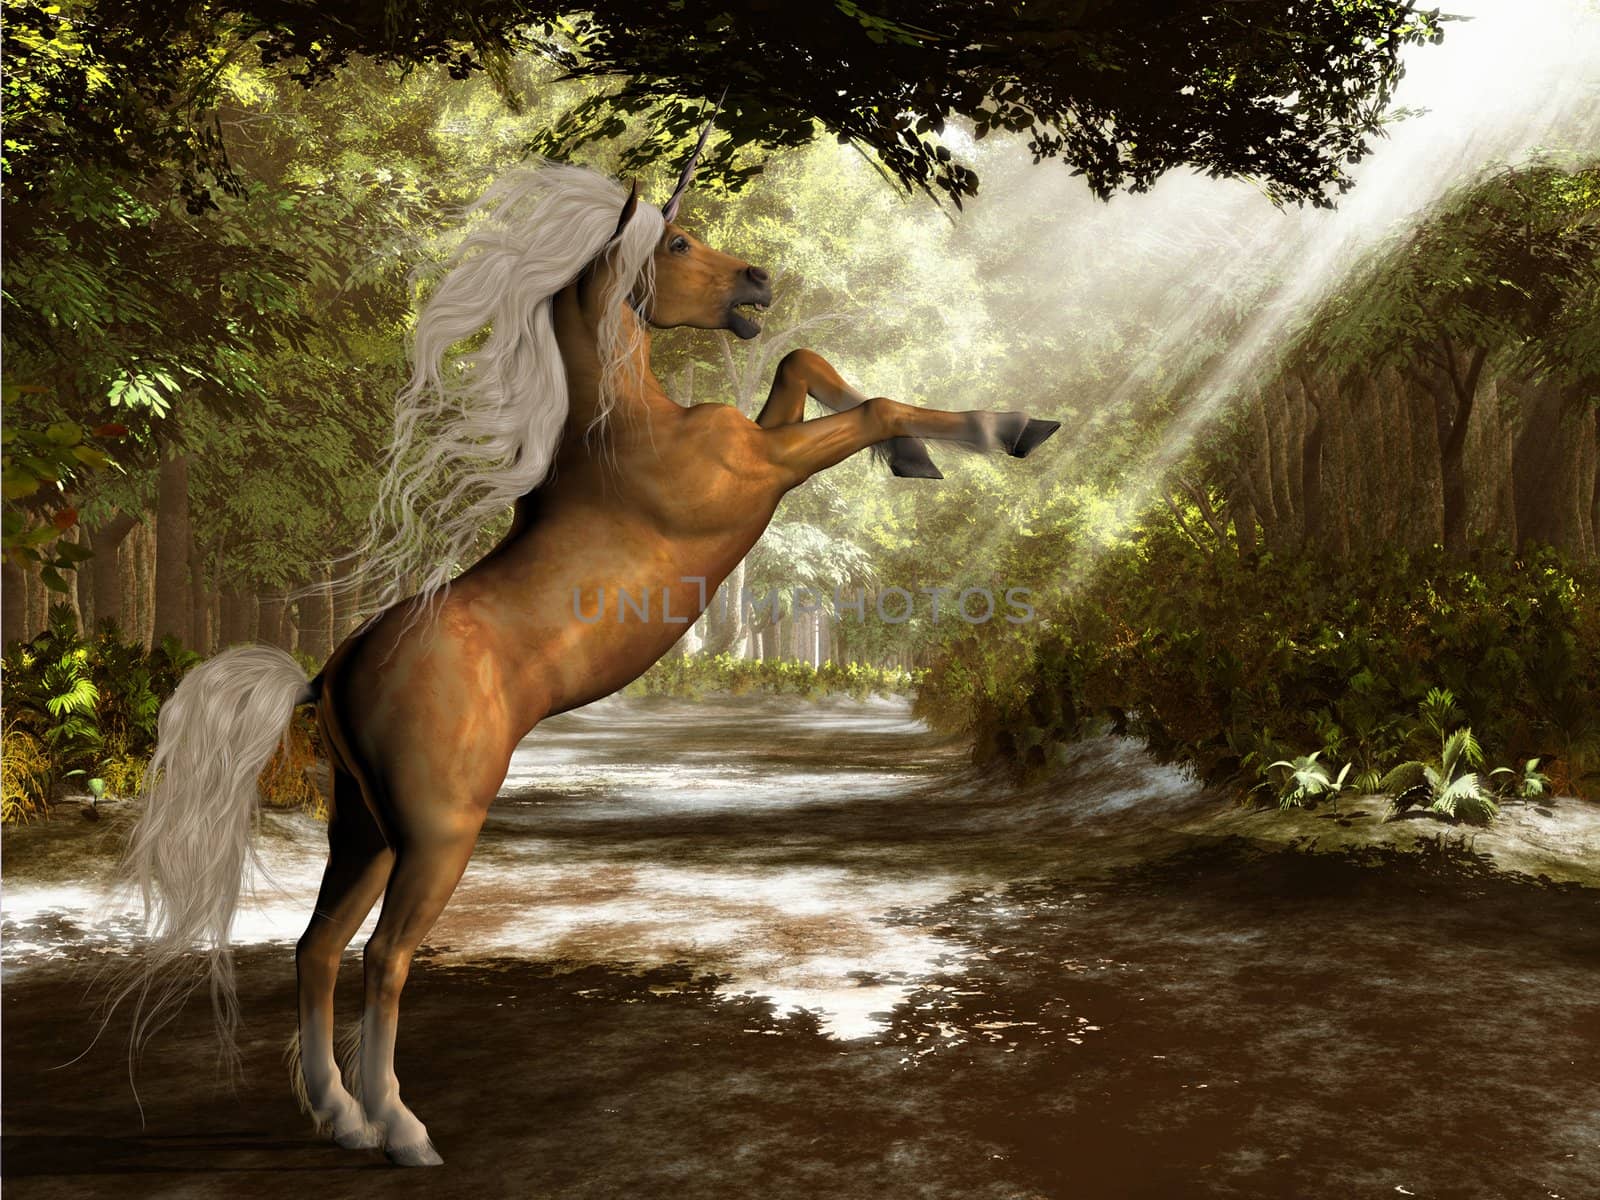 Forest Unicorn by Catmando